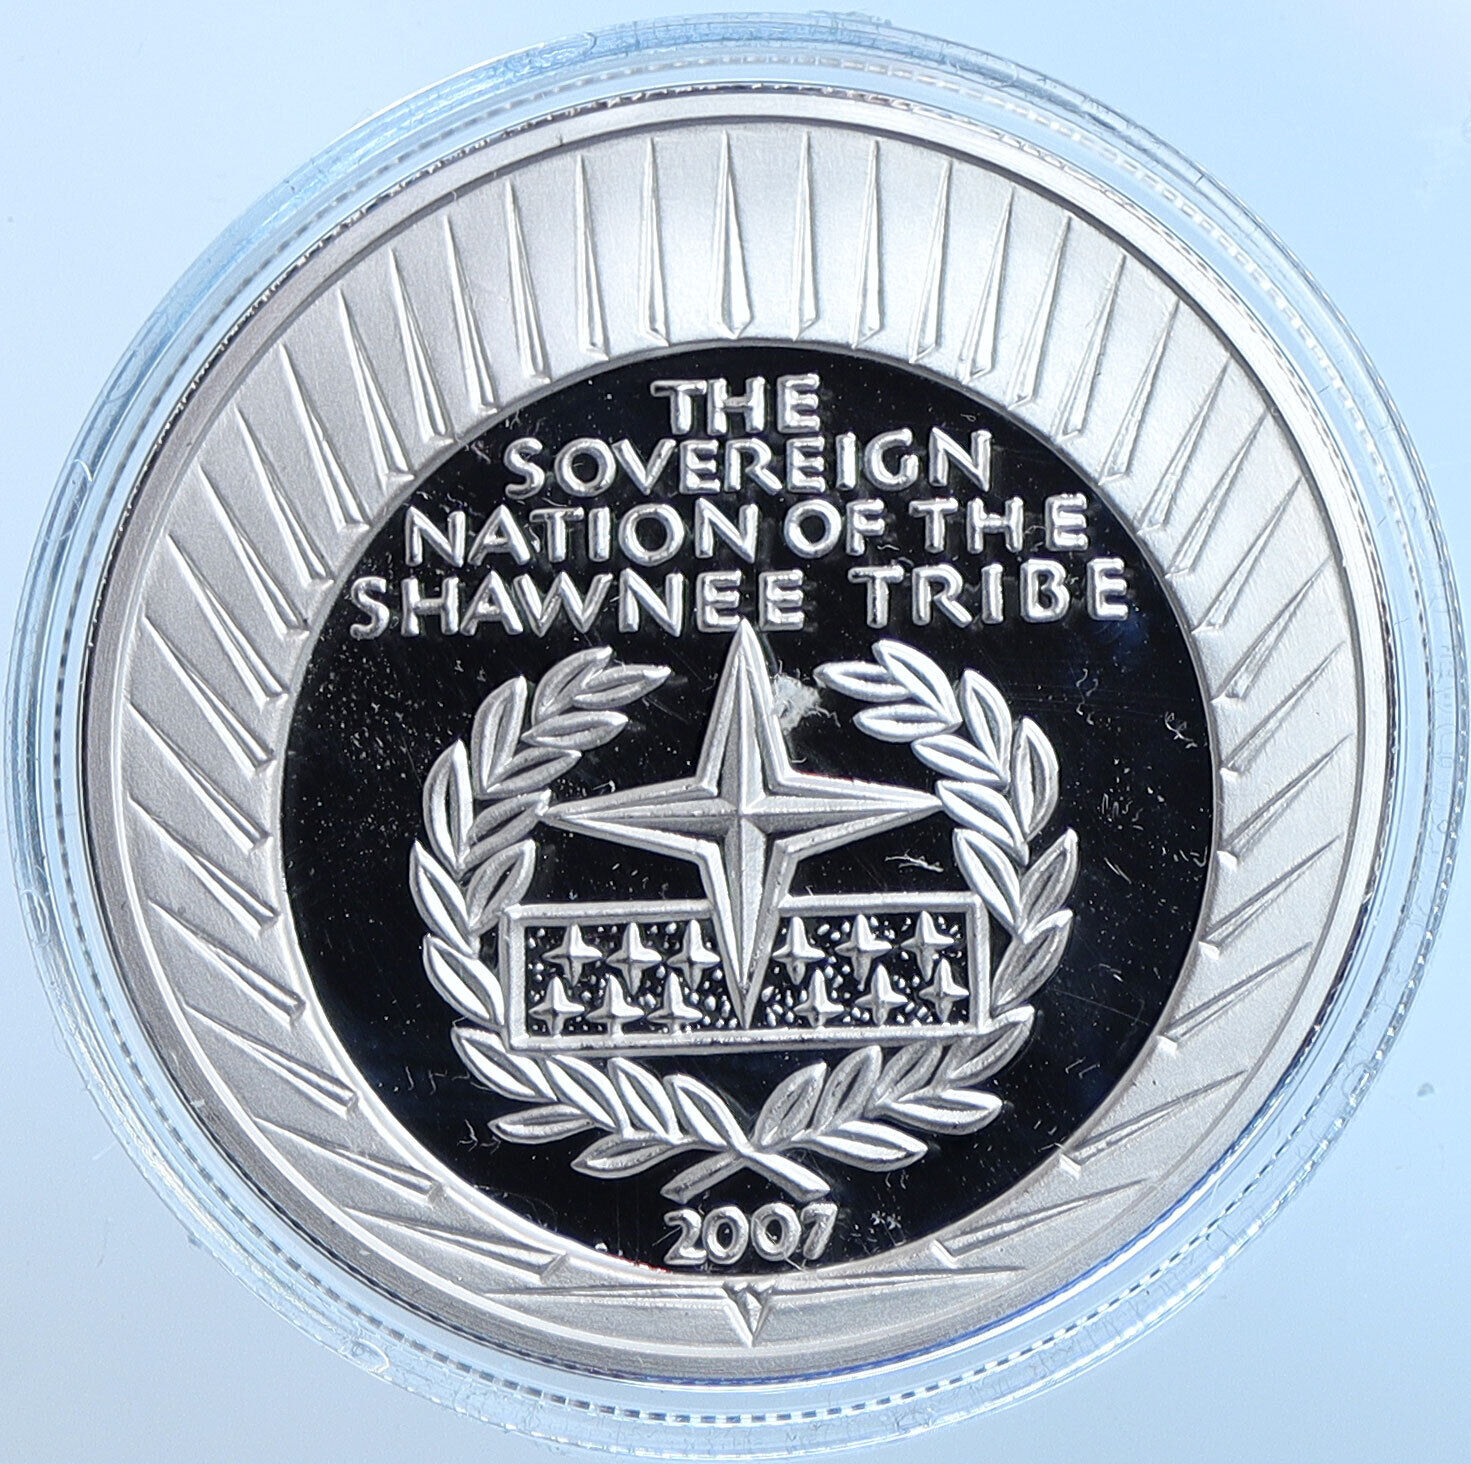 2007 US Shawnee Tribe Tippecanoe Battle of WABASH Proof Silver $1 Coin i114635